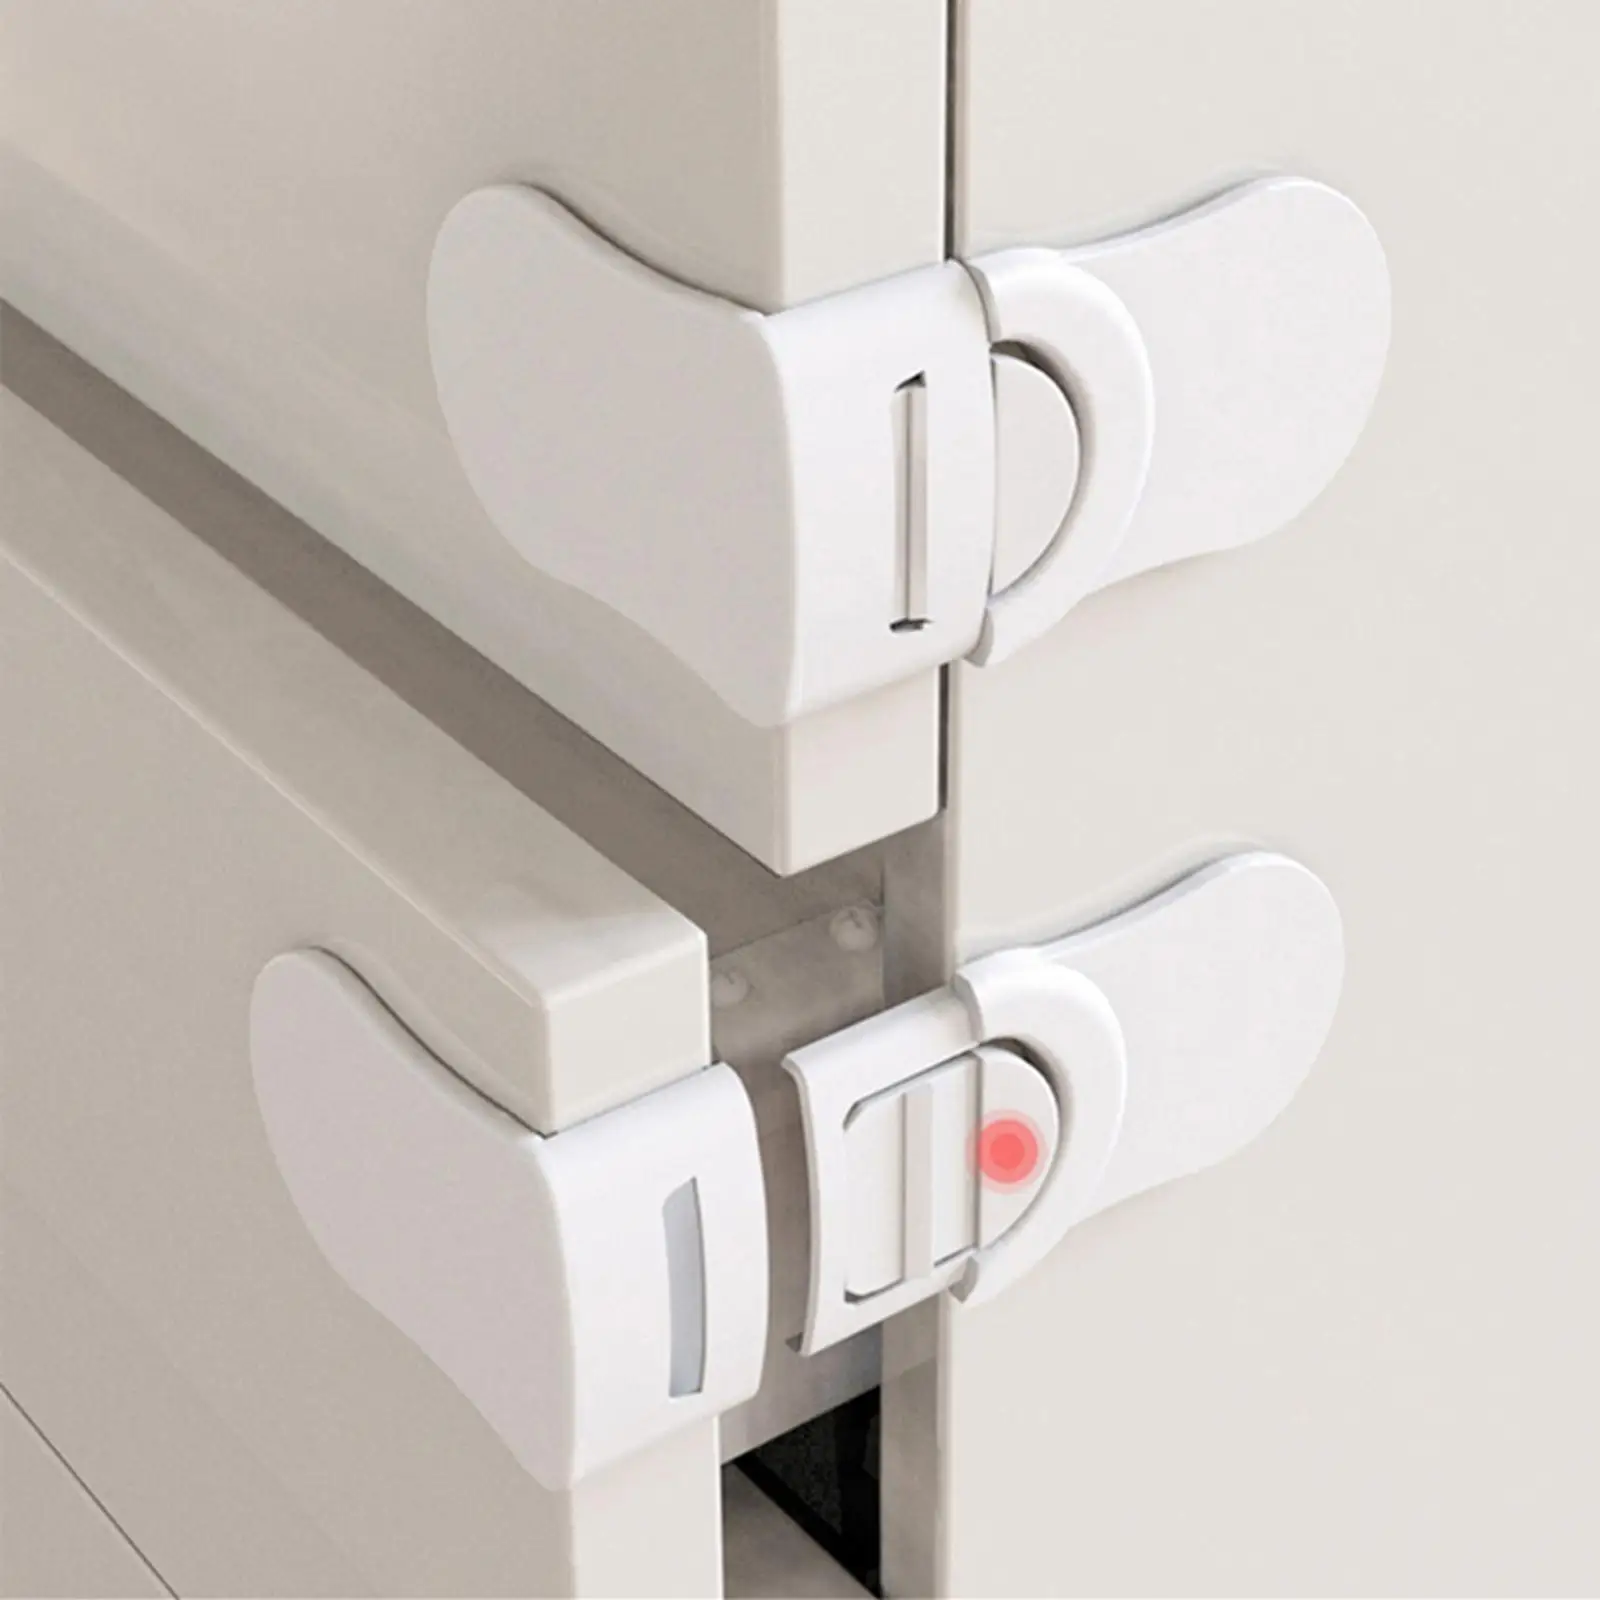 2Pcs Furniture Baby Proofing Cabinet Locks, Cabinet Locks for Living Room